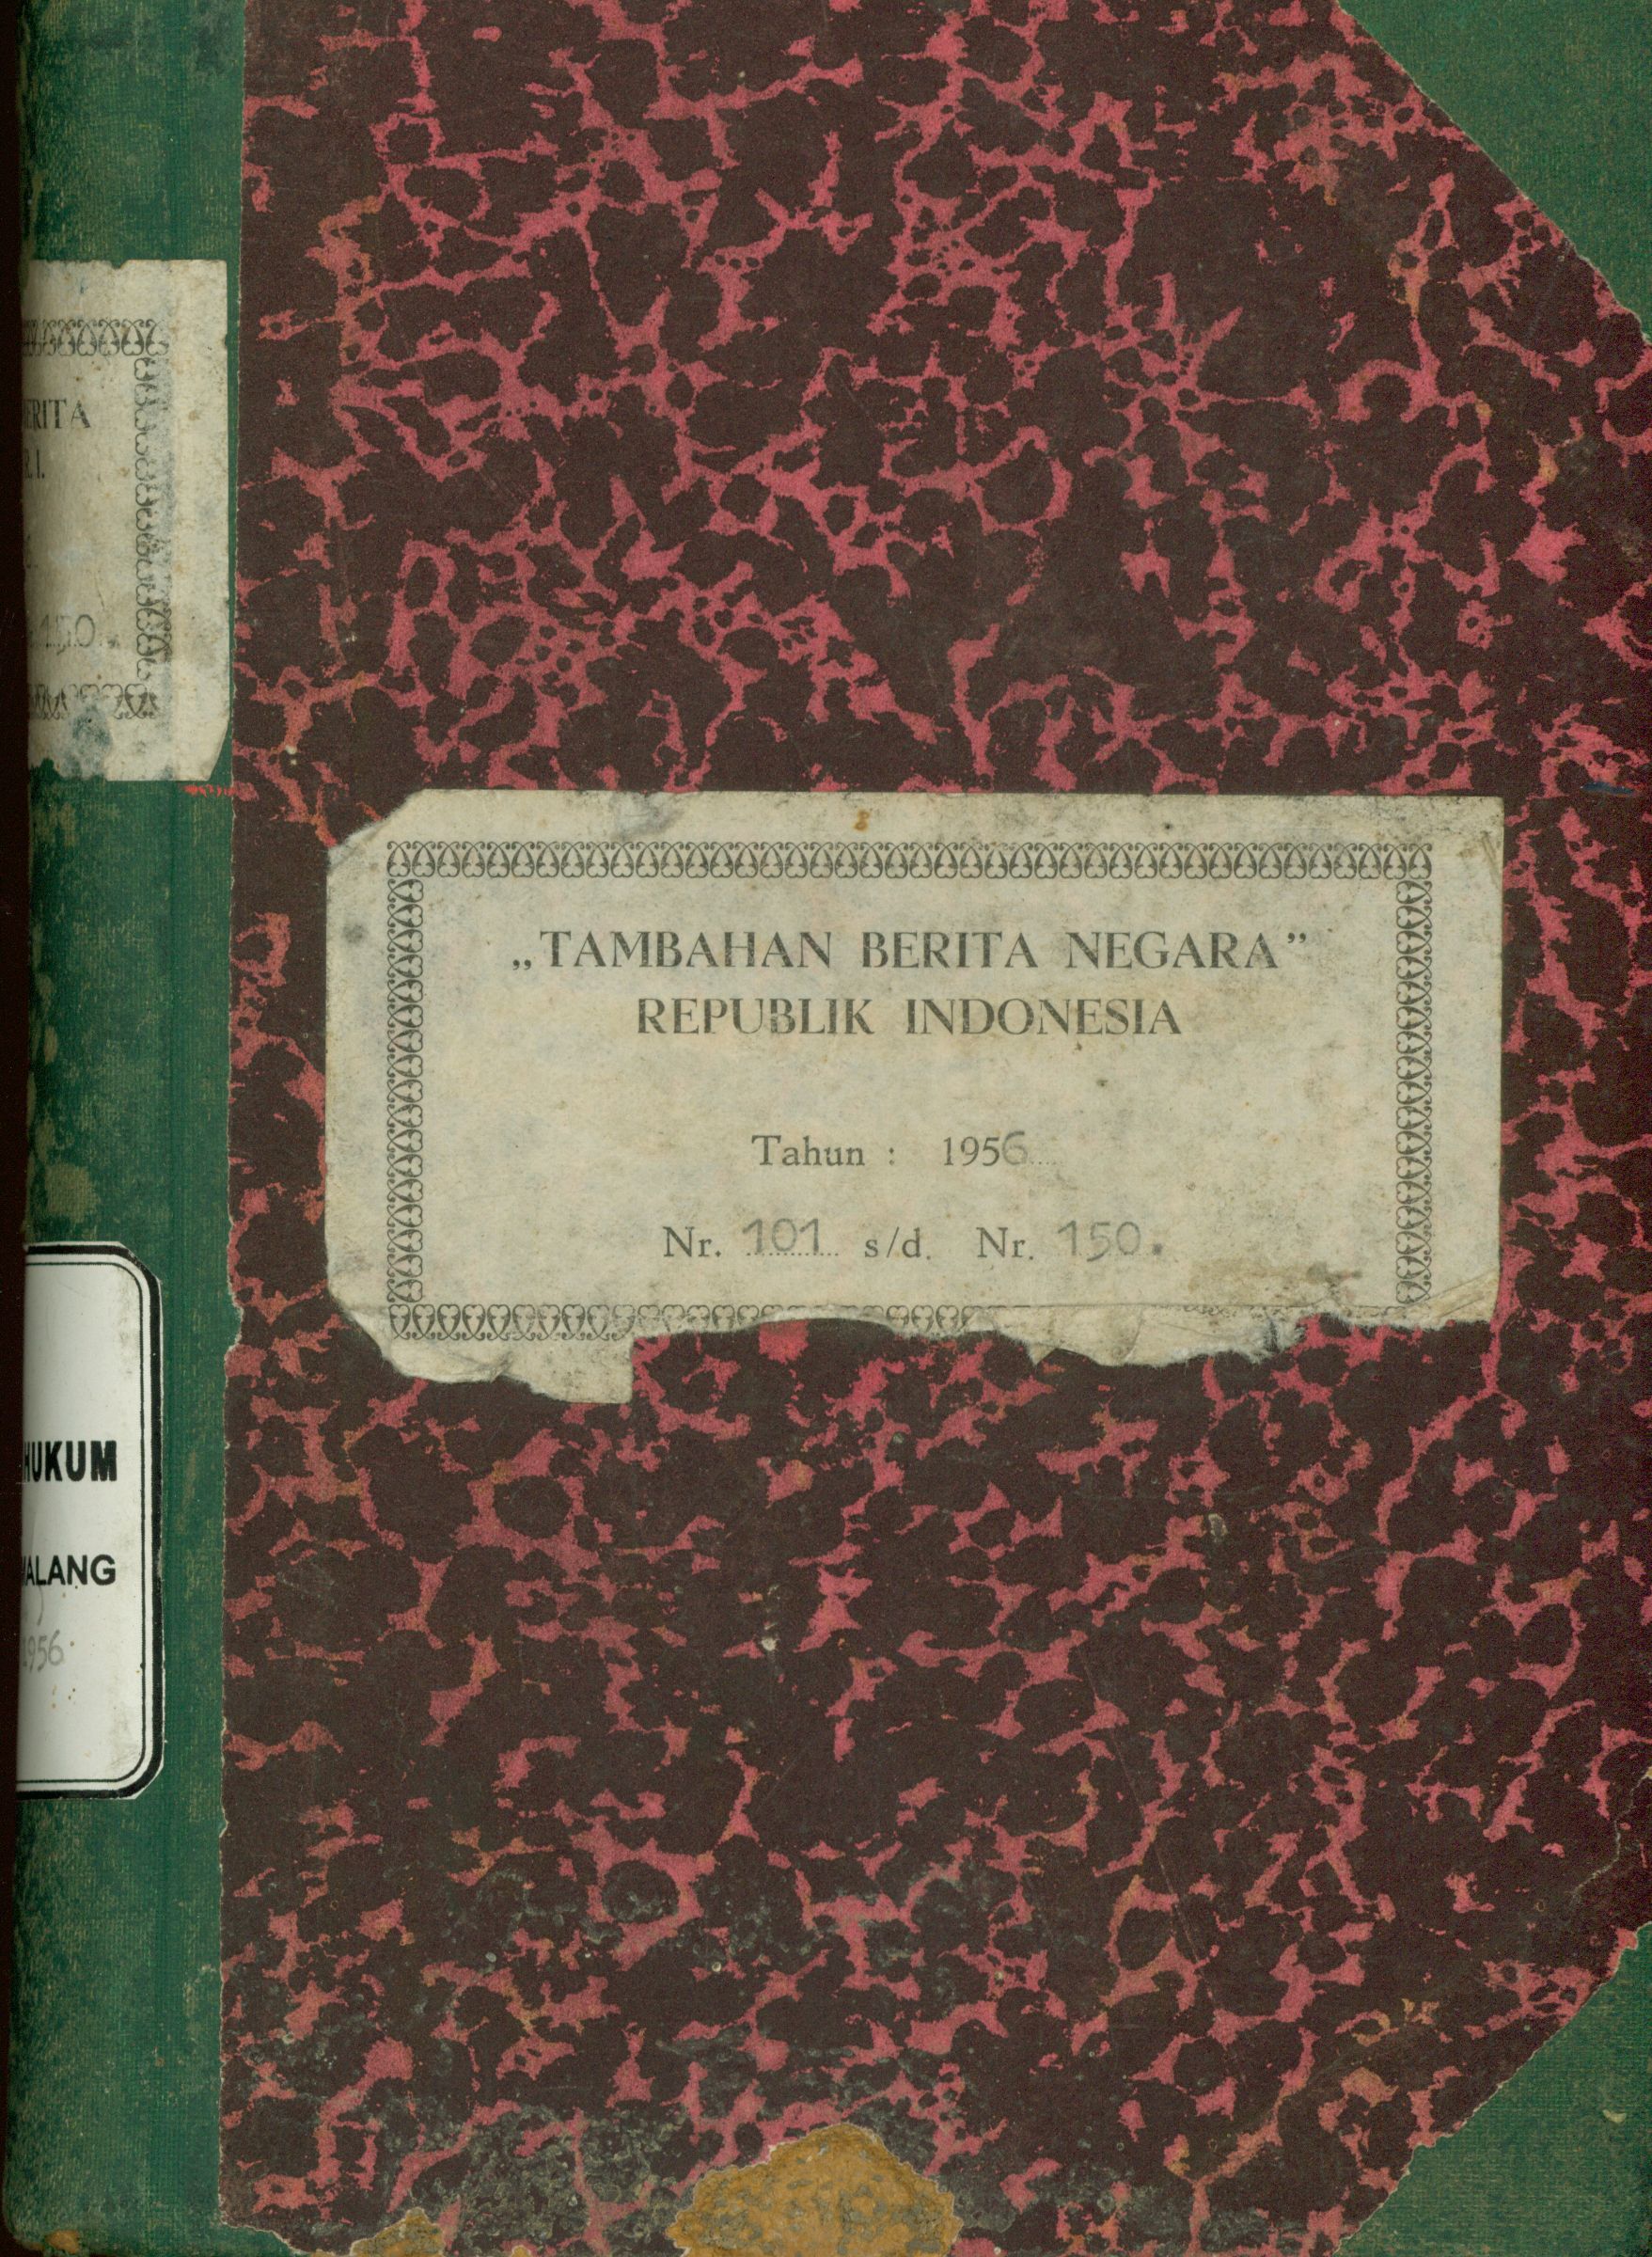 Tambahan Berita Negara Republik Indonesia Tahun : 1956 Nr. 101 s/d Nr. 150